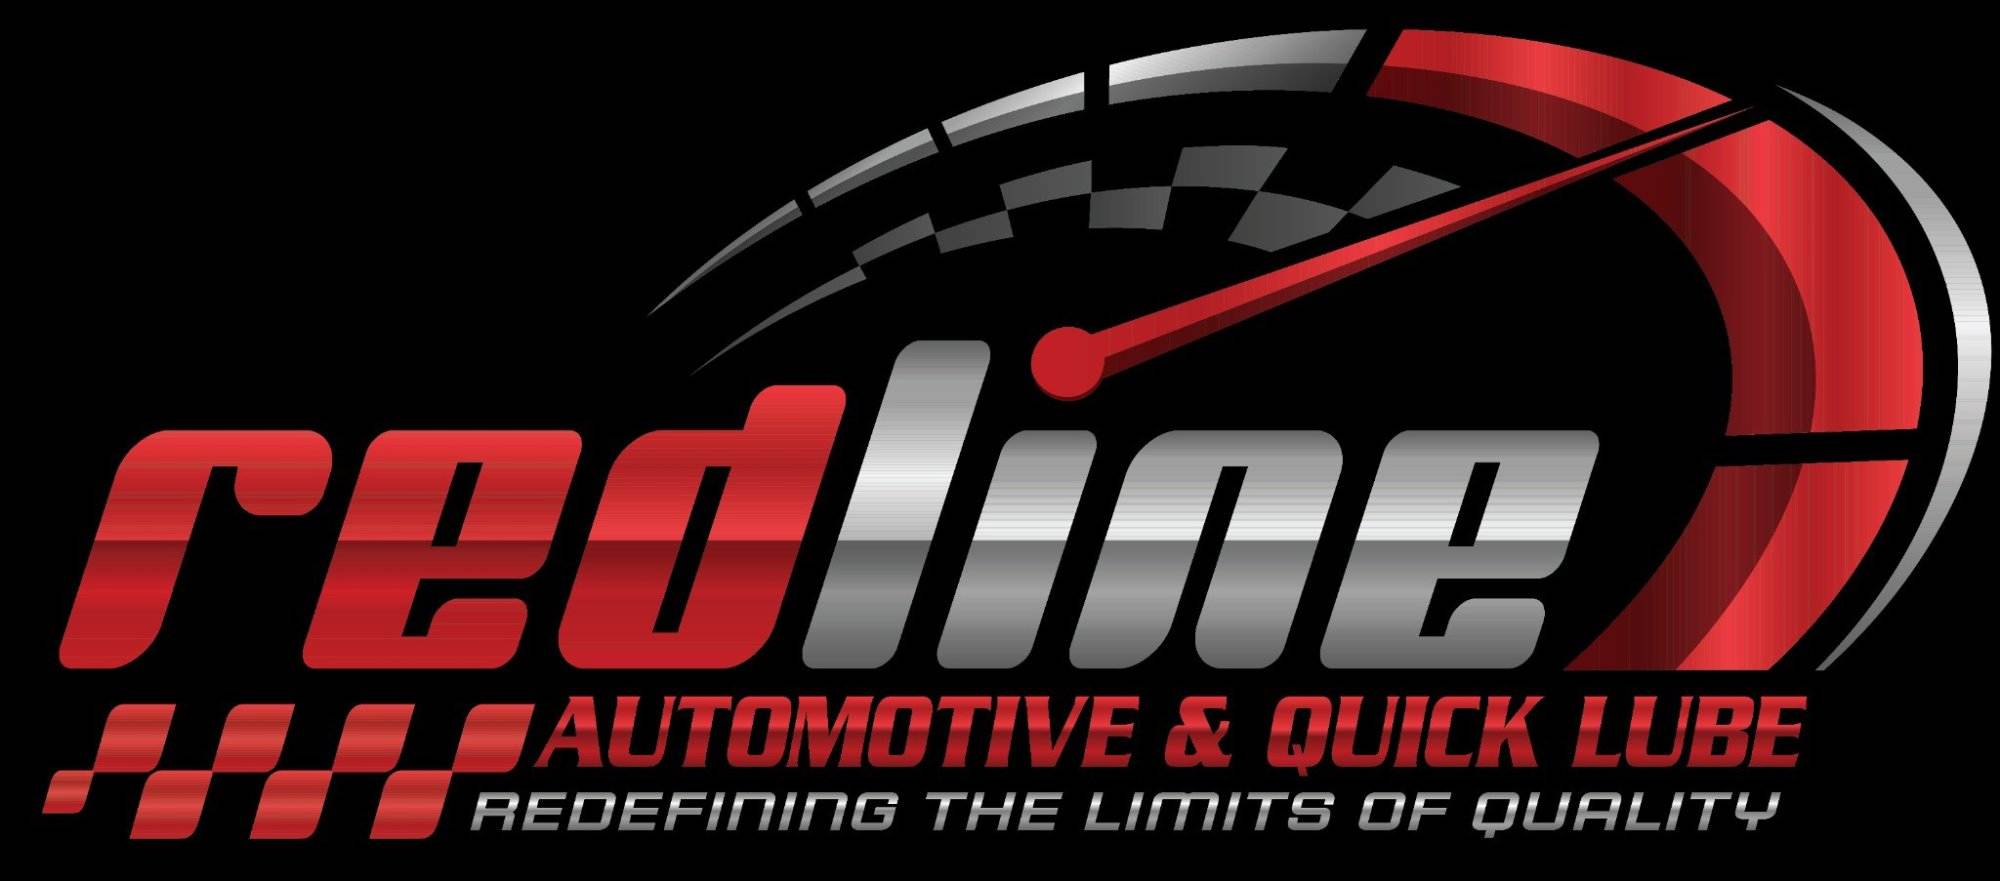 Redline Automobile & Quick Lube